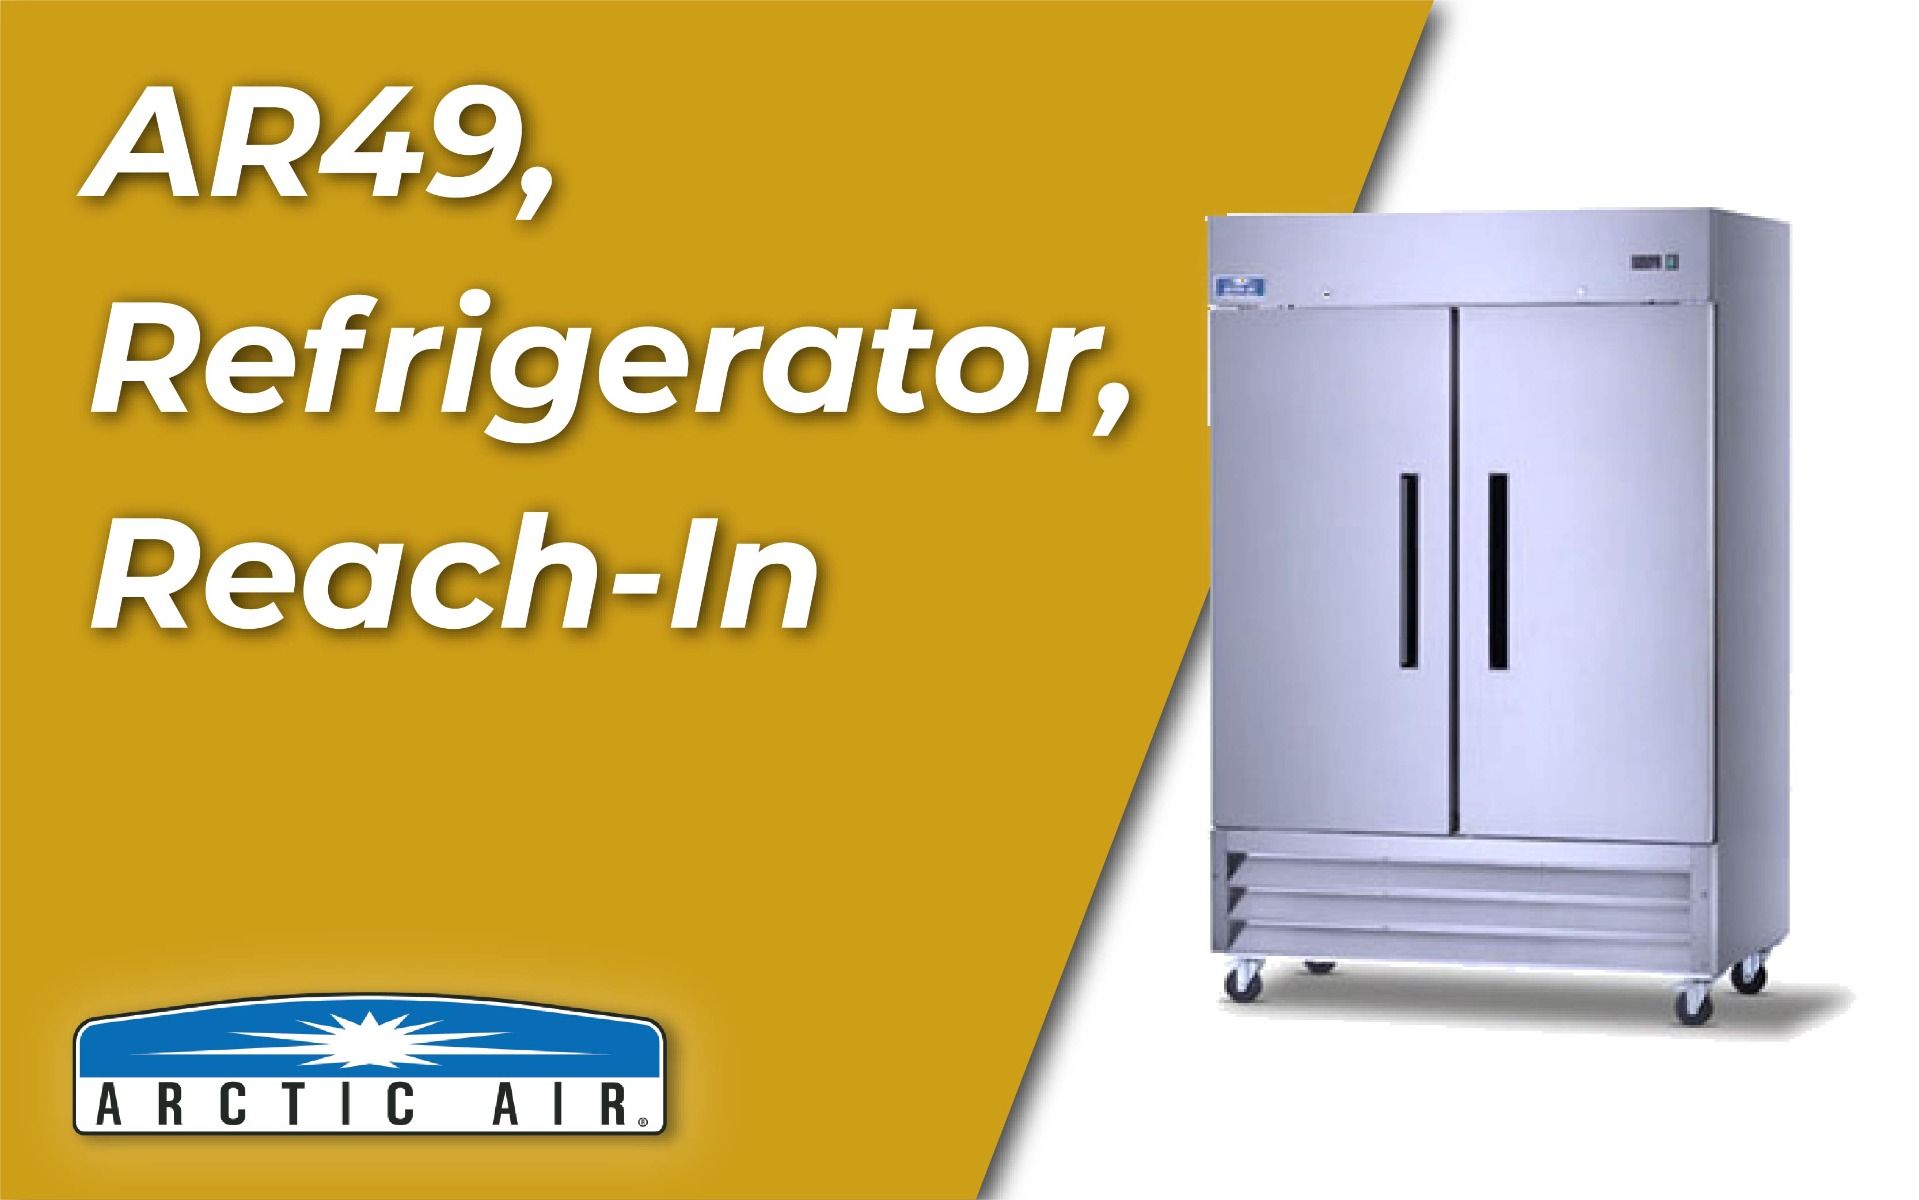 Arctic Air, AR49, Refrigerator, Reach-In